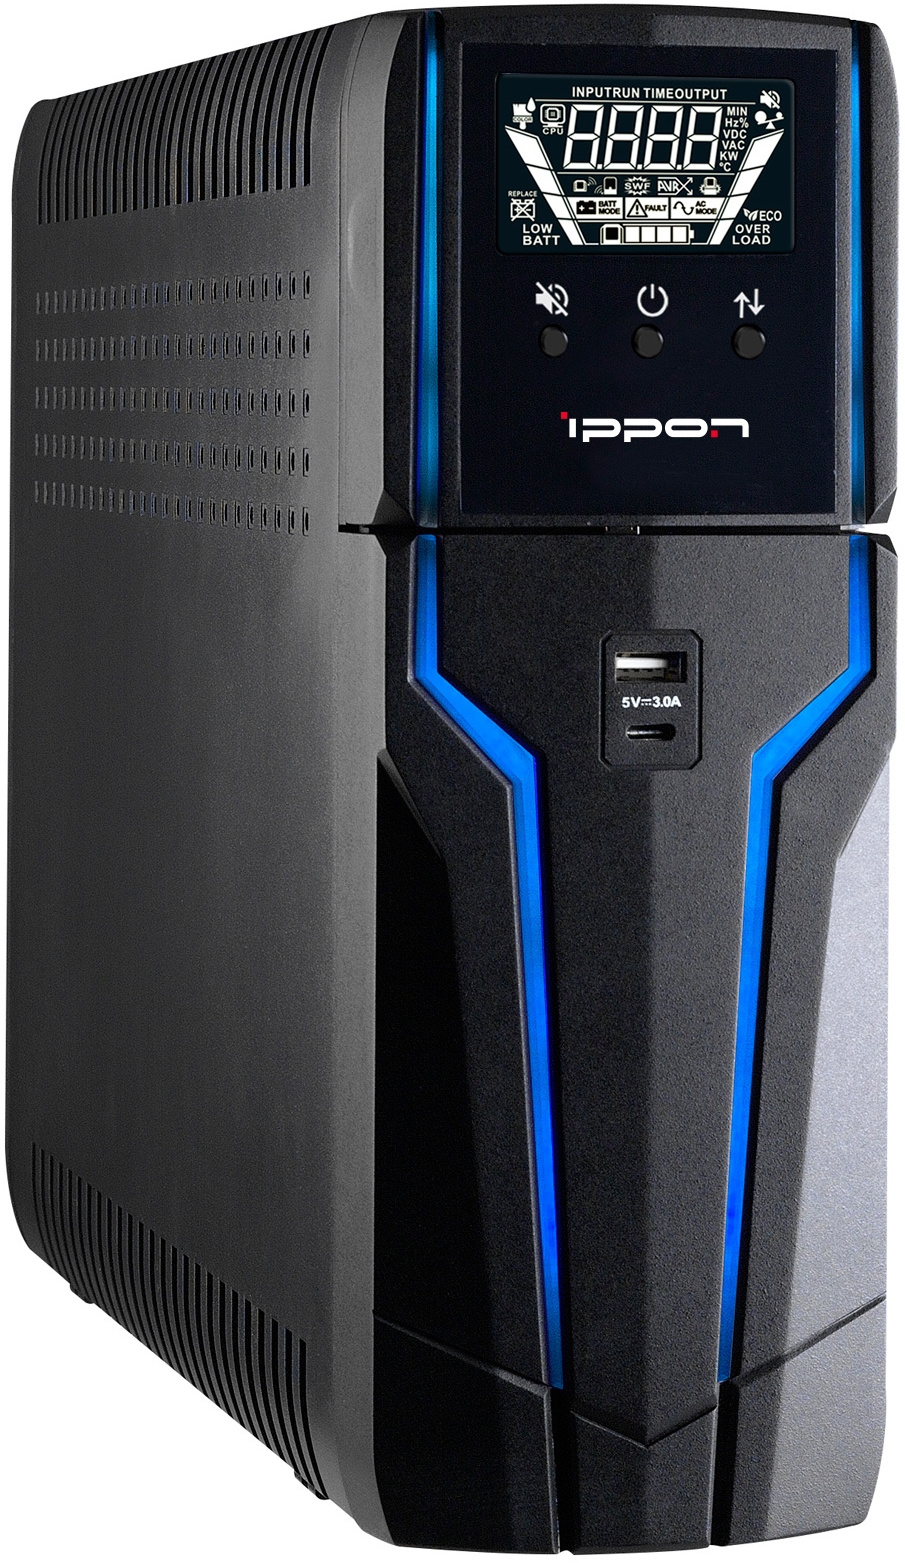 ИБП Ippon Game Power Pro 1500, 1500 В·А, 960 Вт, EURO, розеток - 2, USB, черный (1908312)